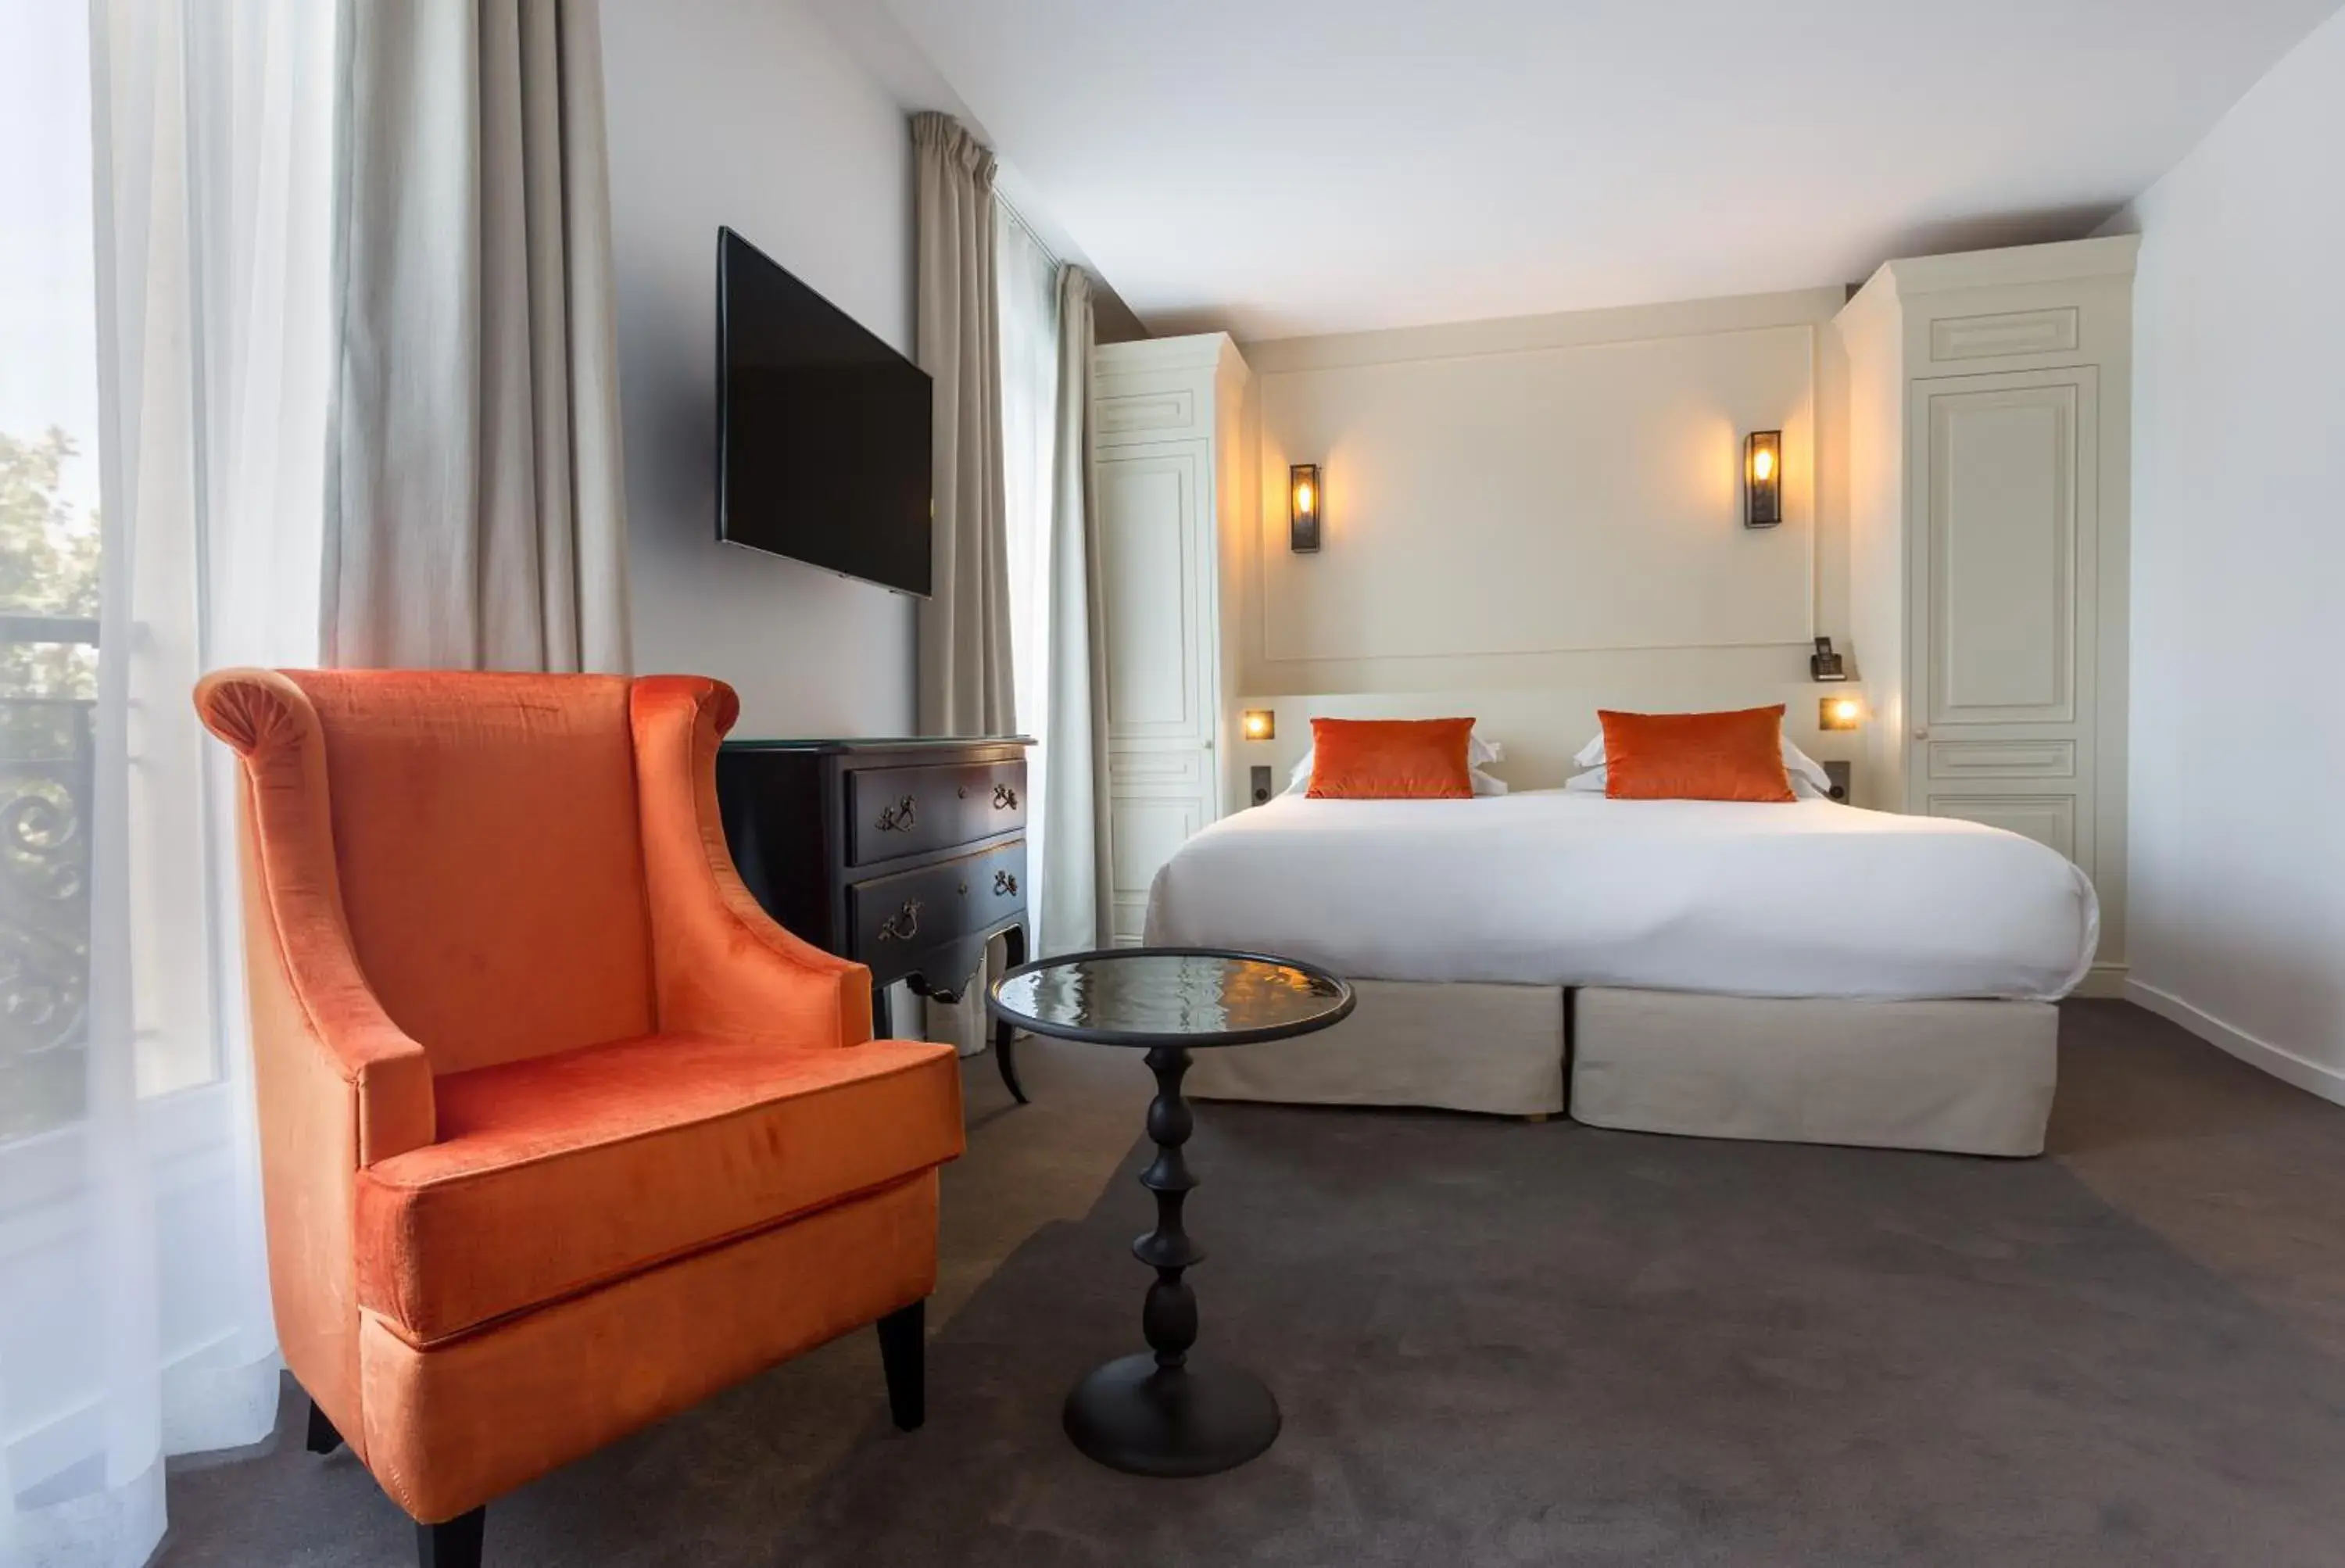 Bed, Room Photo in Hotel La Comtesse